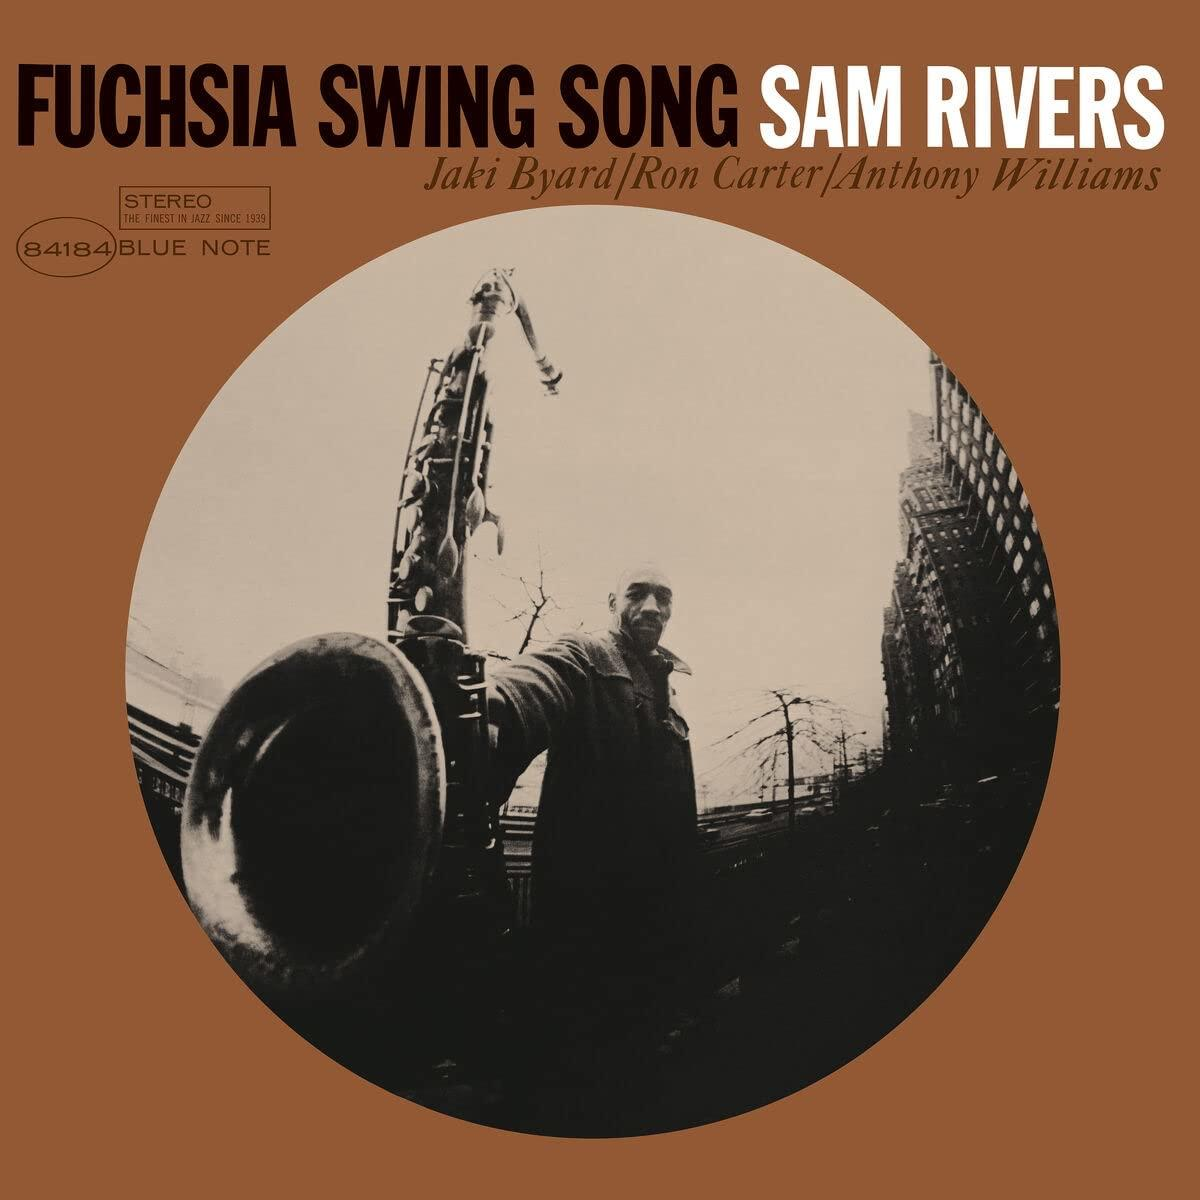 Sam Rivers - Fuchsia Swing (Vinyl) Song 